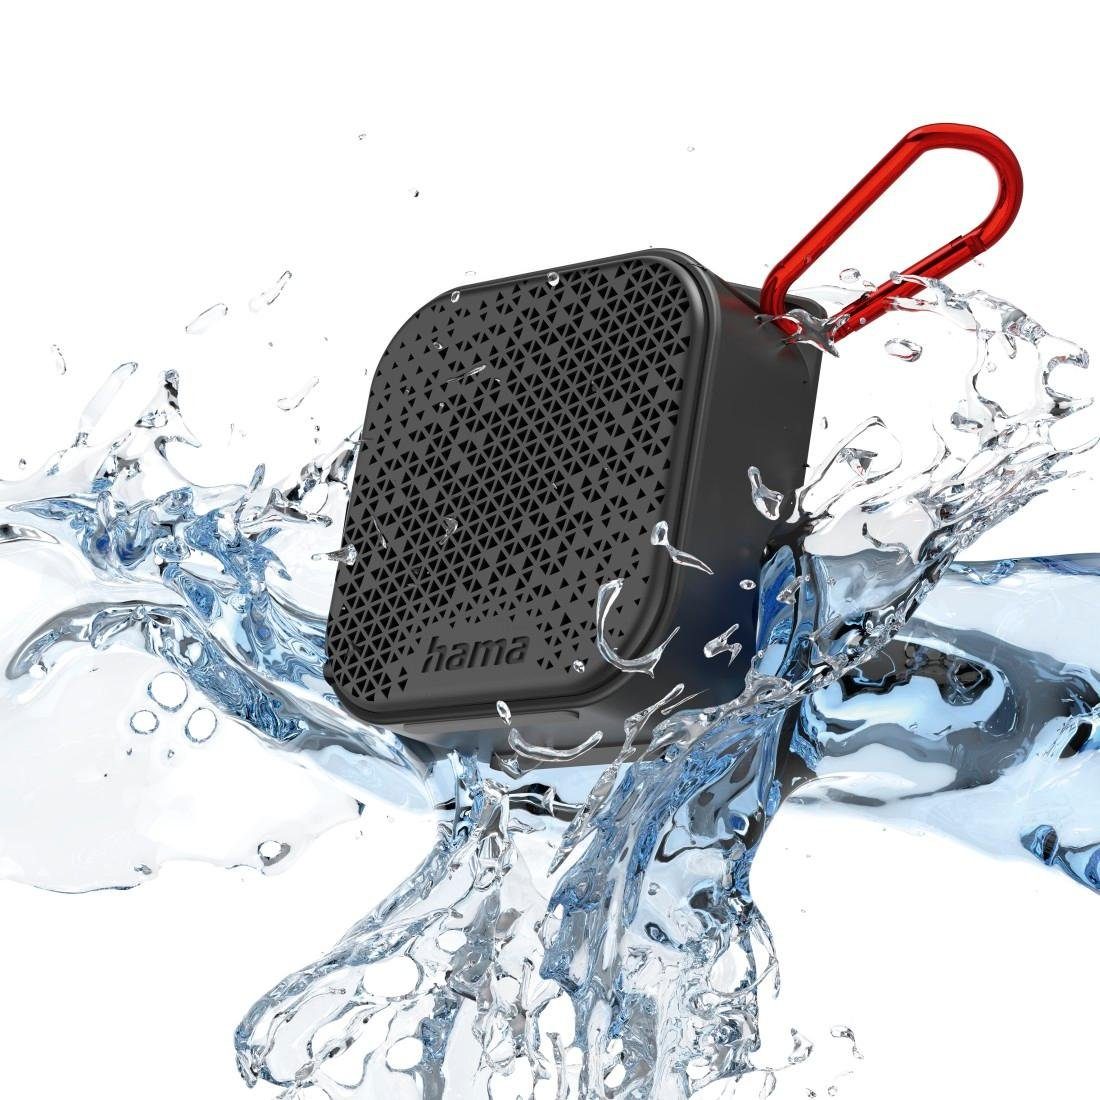 Hama Bluetooth Lautsprecher kabellos wasserdicht IPX7 Outdoor mit Akku Bluetooth-Lautsprecher (3,5 W) schwarz